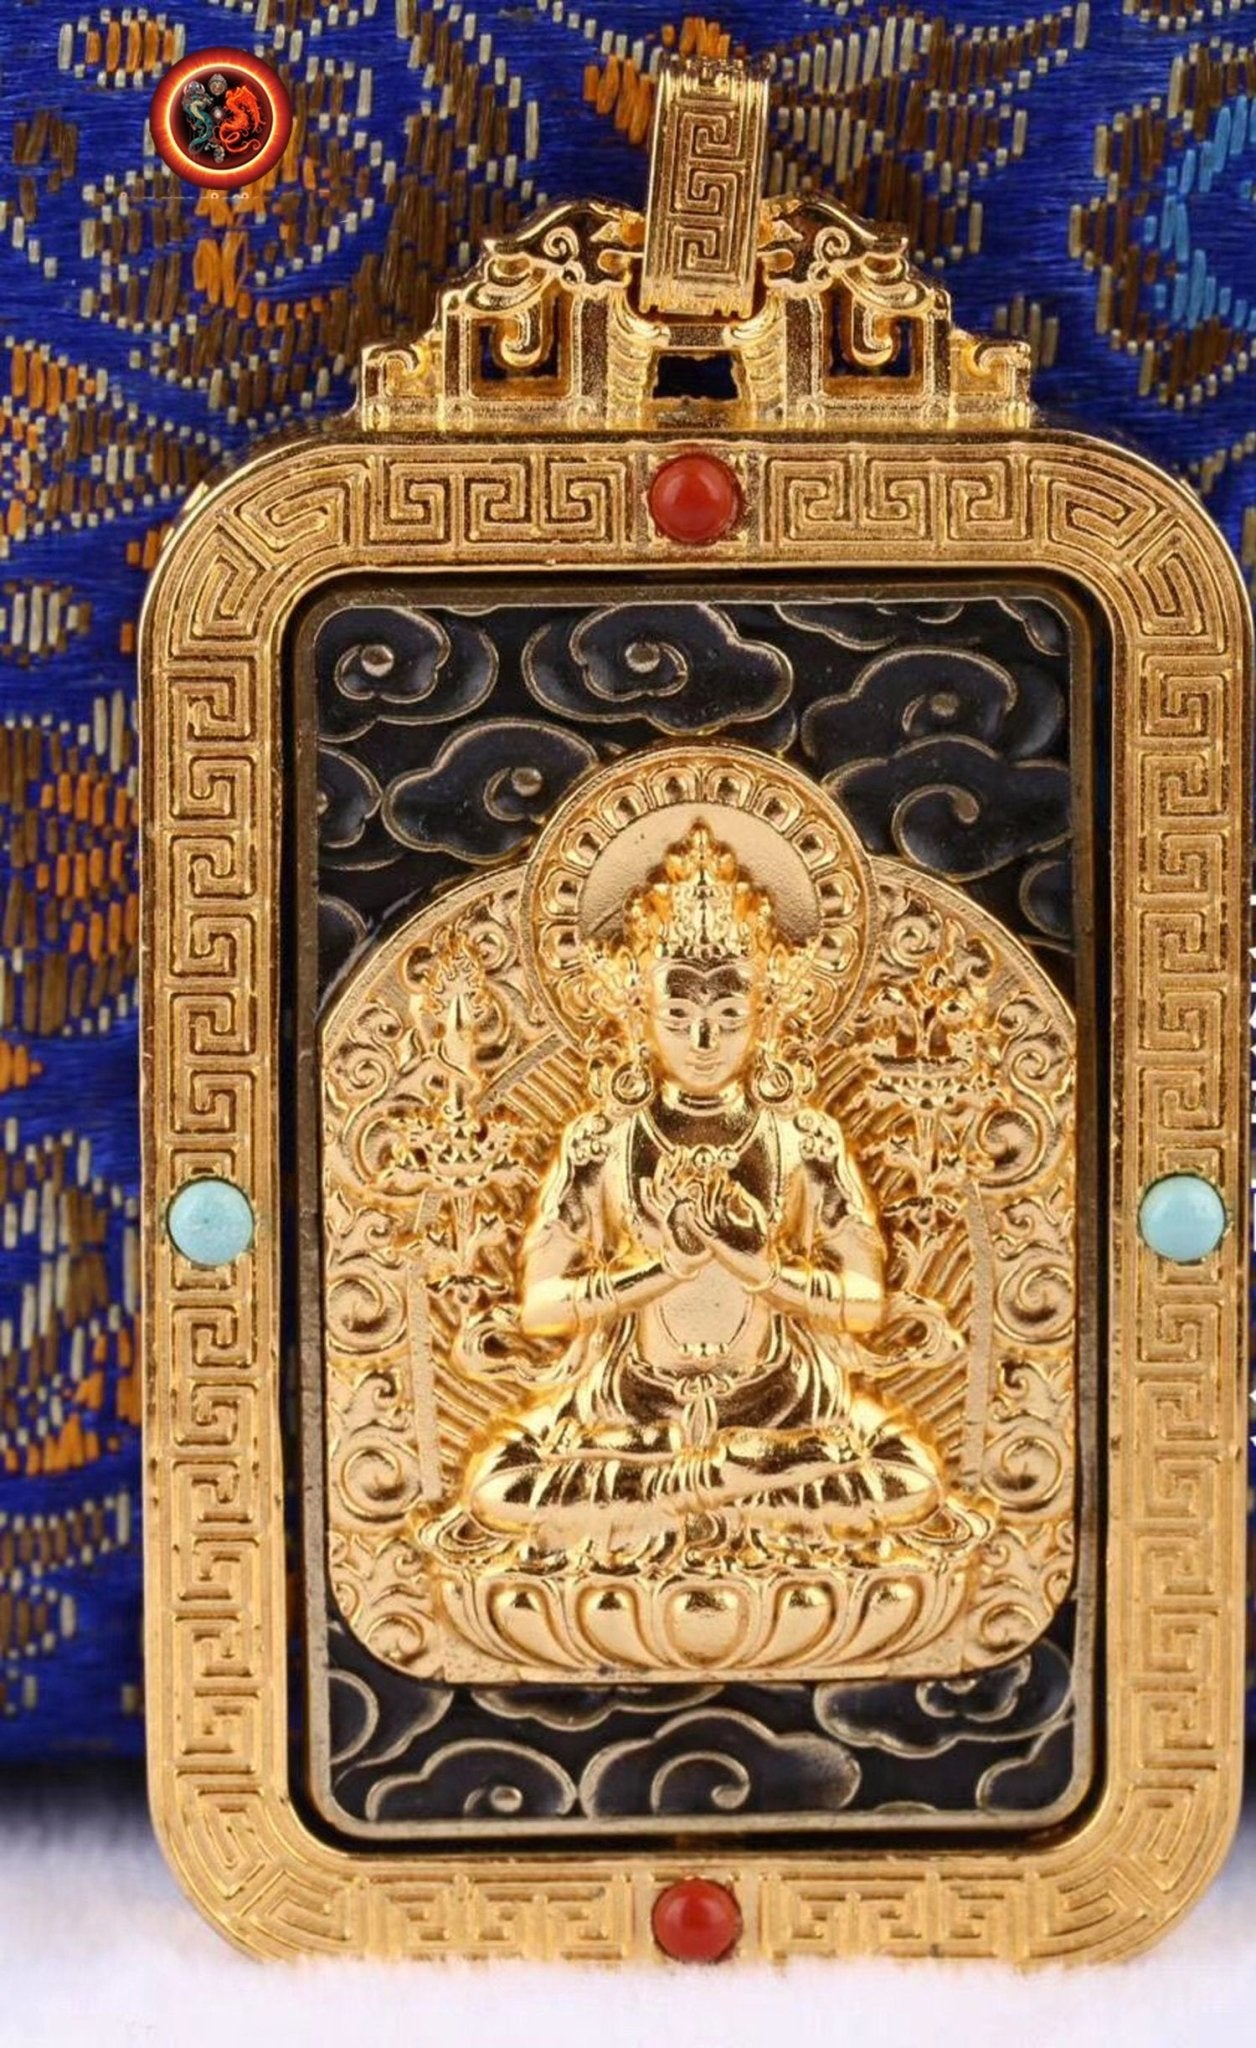 Pendentif Bouddha, Samantabhadra. Amulette de protection bouddhiste  Argent 925 plaqué or 18K. Pendentif tournant - obsidian dragon